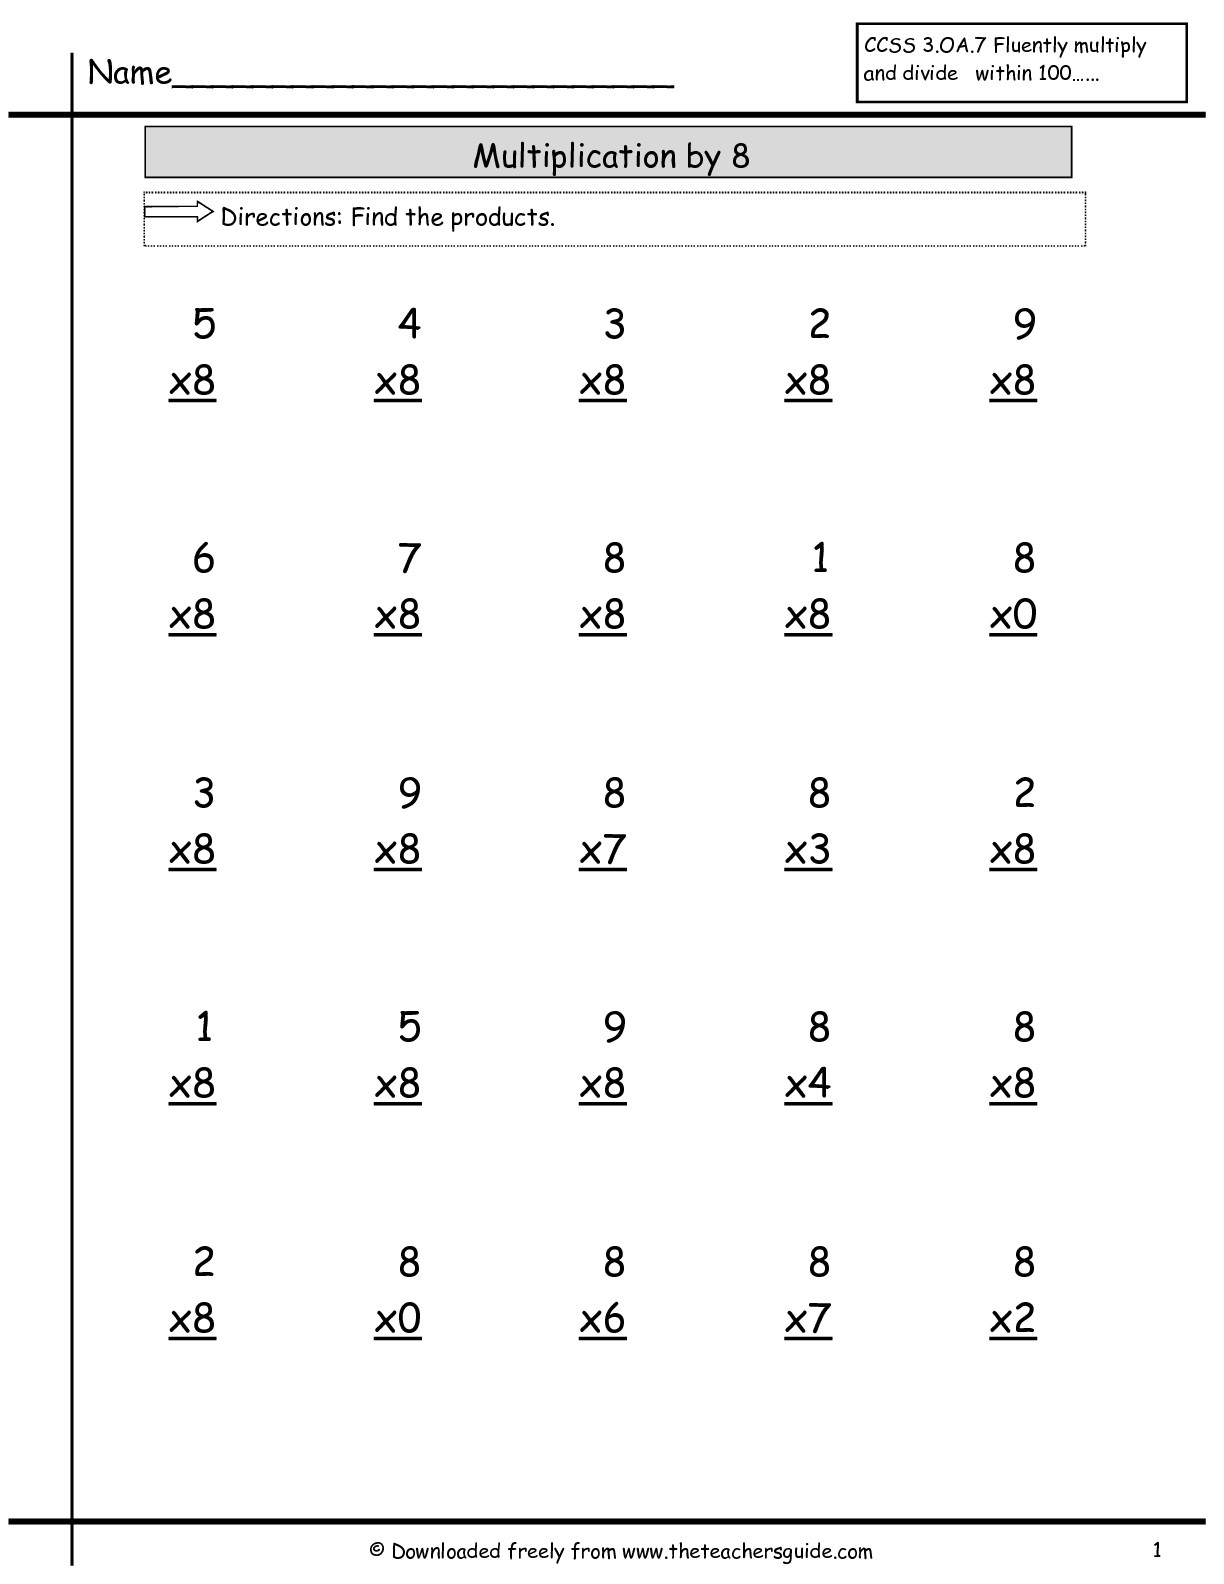 0-9-multiplication-chart-printablemultiplication